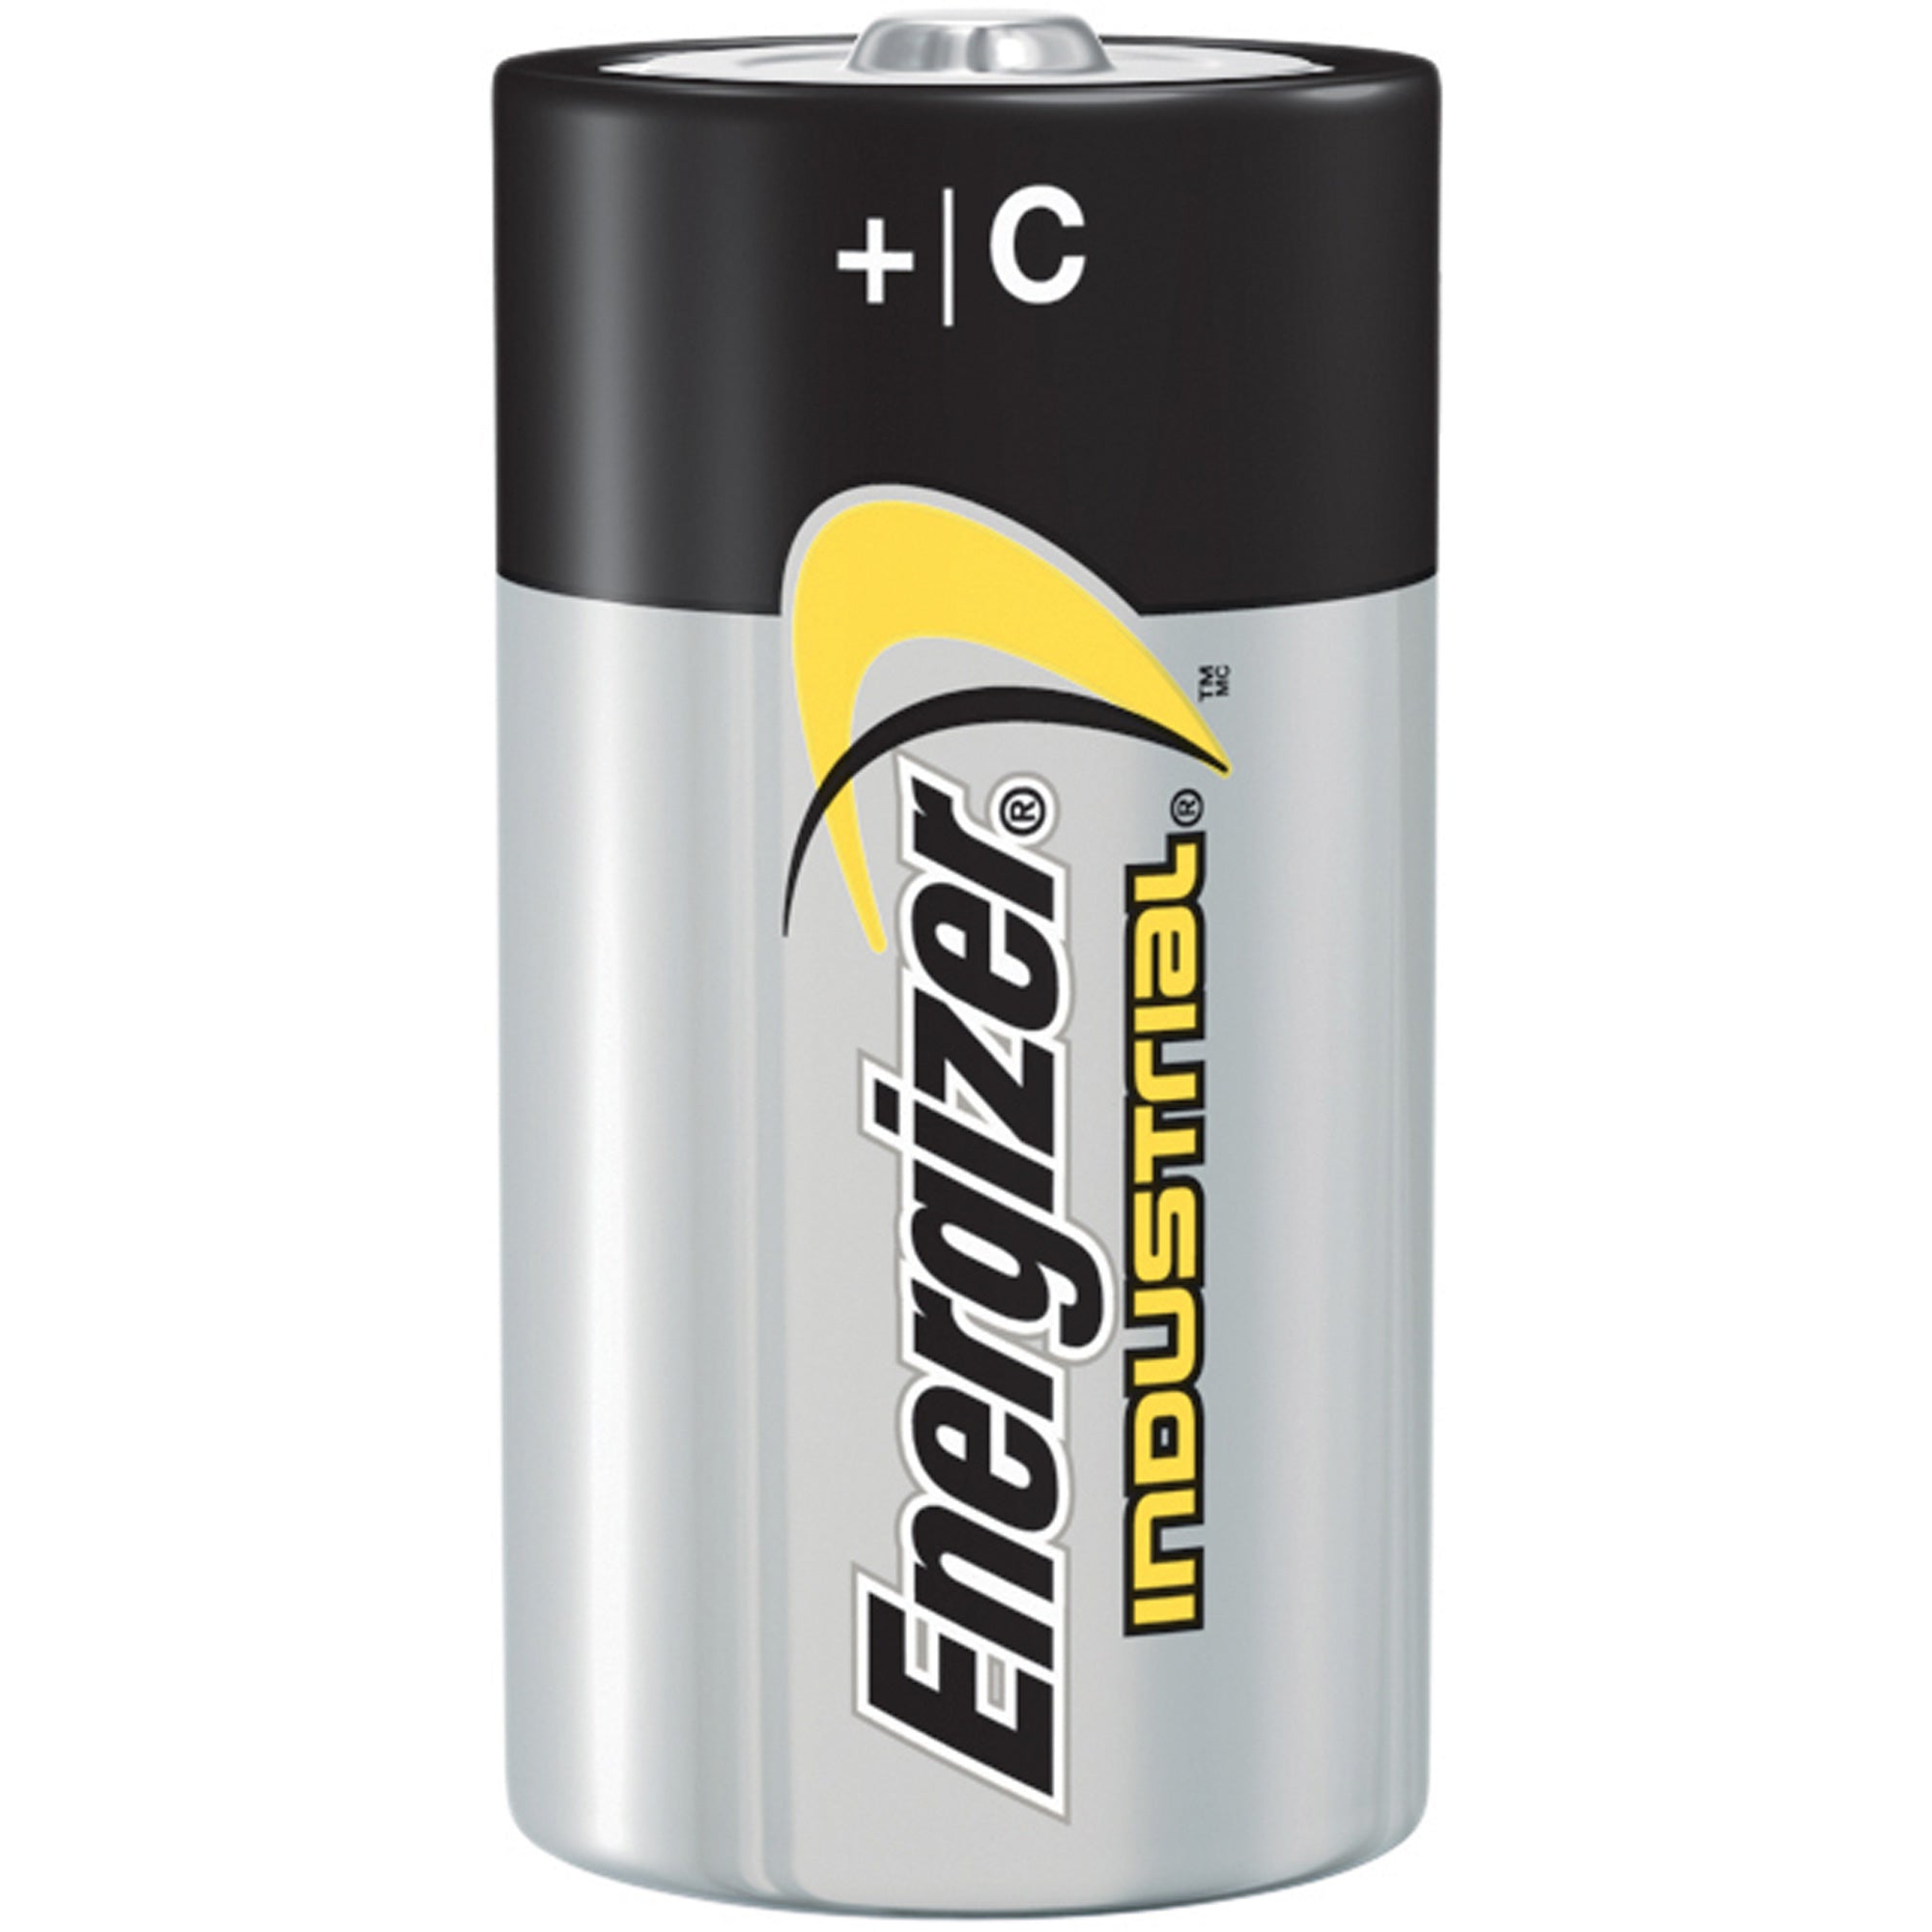 Energizer Industrial Batteries, C, 2-pack